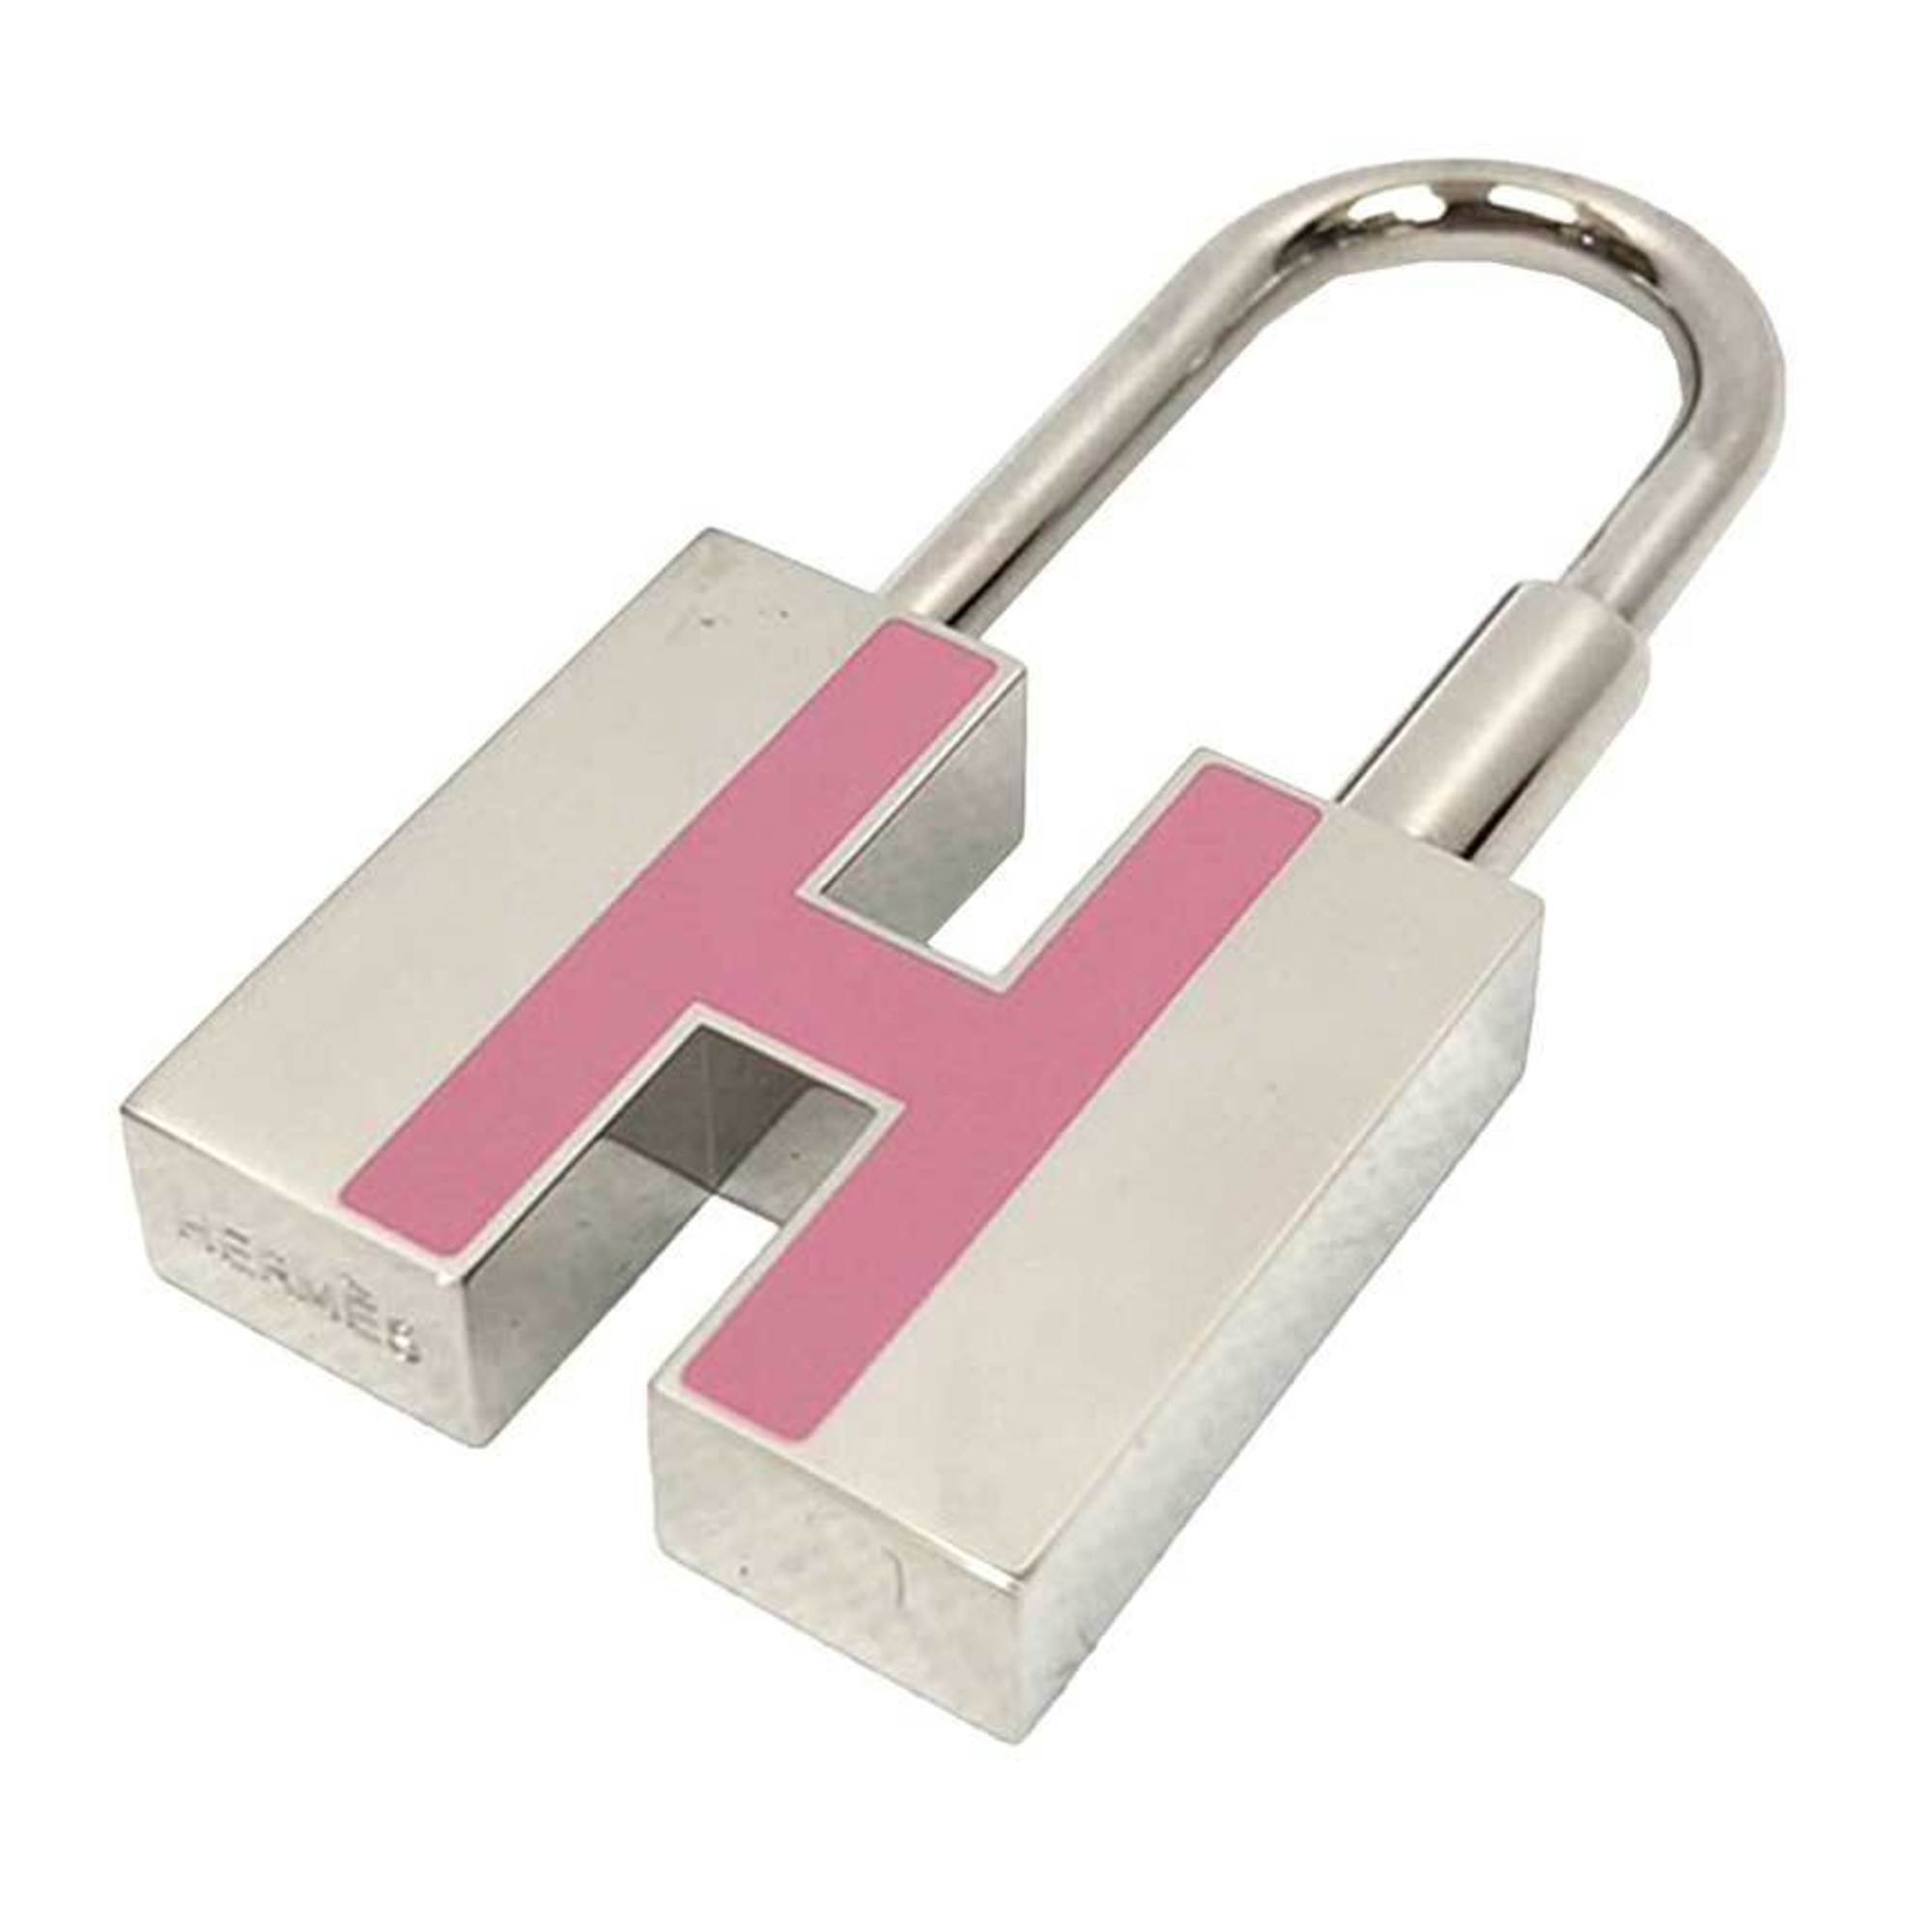 HERMES Key Hook Keychain Bag Charm H Cadena Light Pink/Silver Hermes